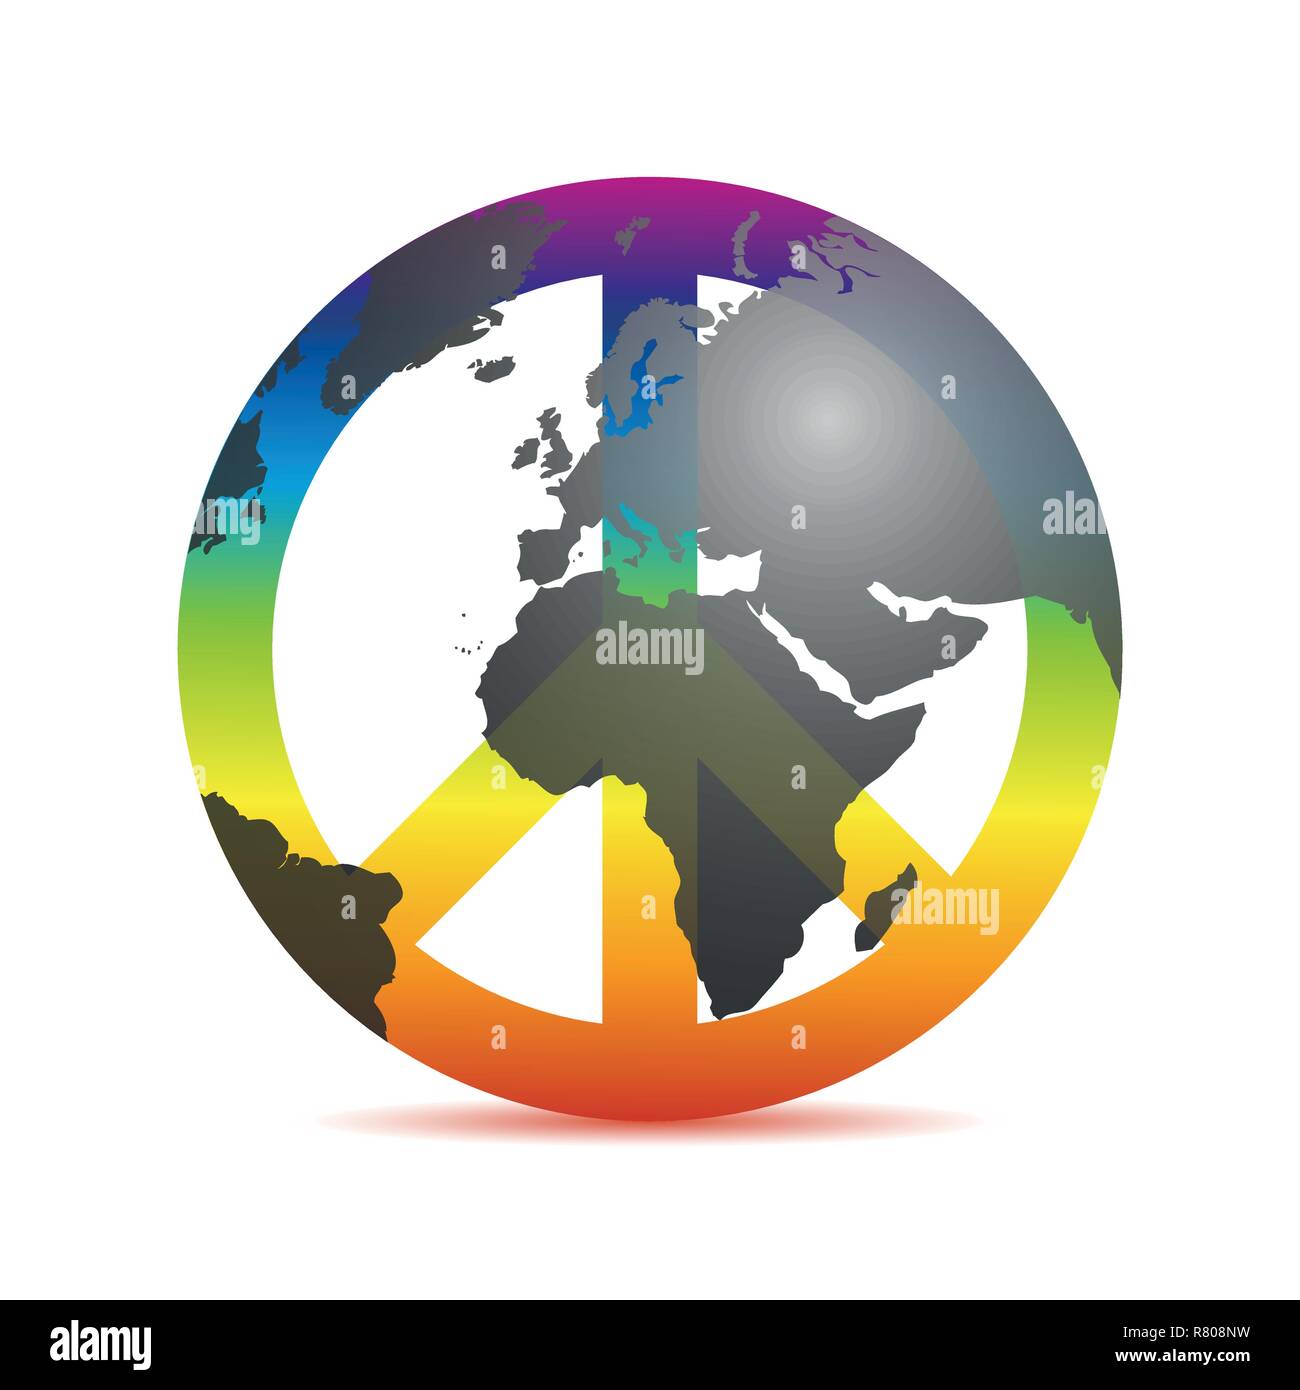 Universal Peace bunt Symbol mit Erde in Regenbogenfarben Vektor-illustration EPS 10. Stock Vektor